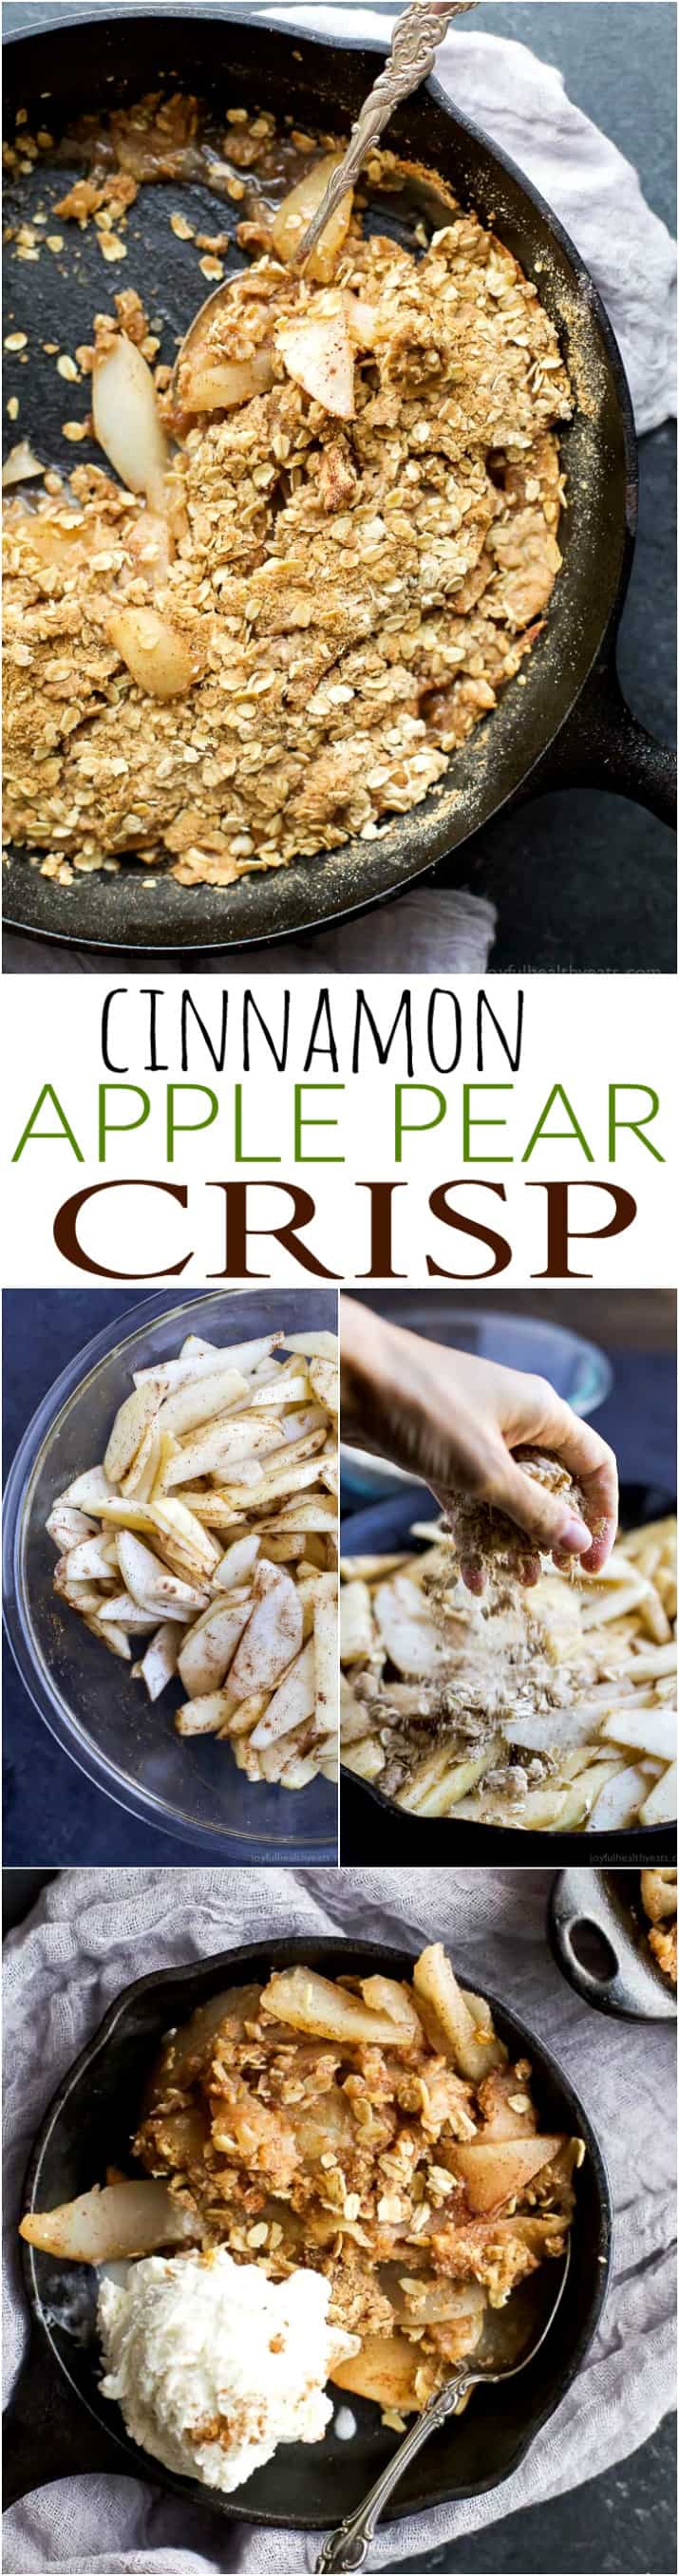 Pinterest collage for Cinnamon Apple Pear Crisp recipe